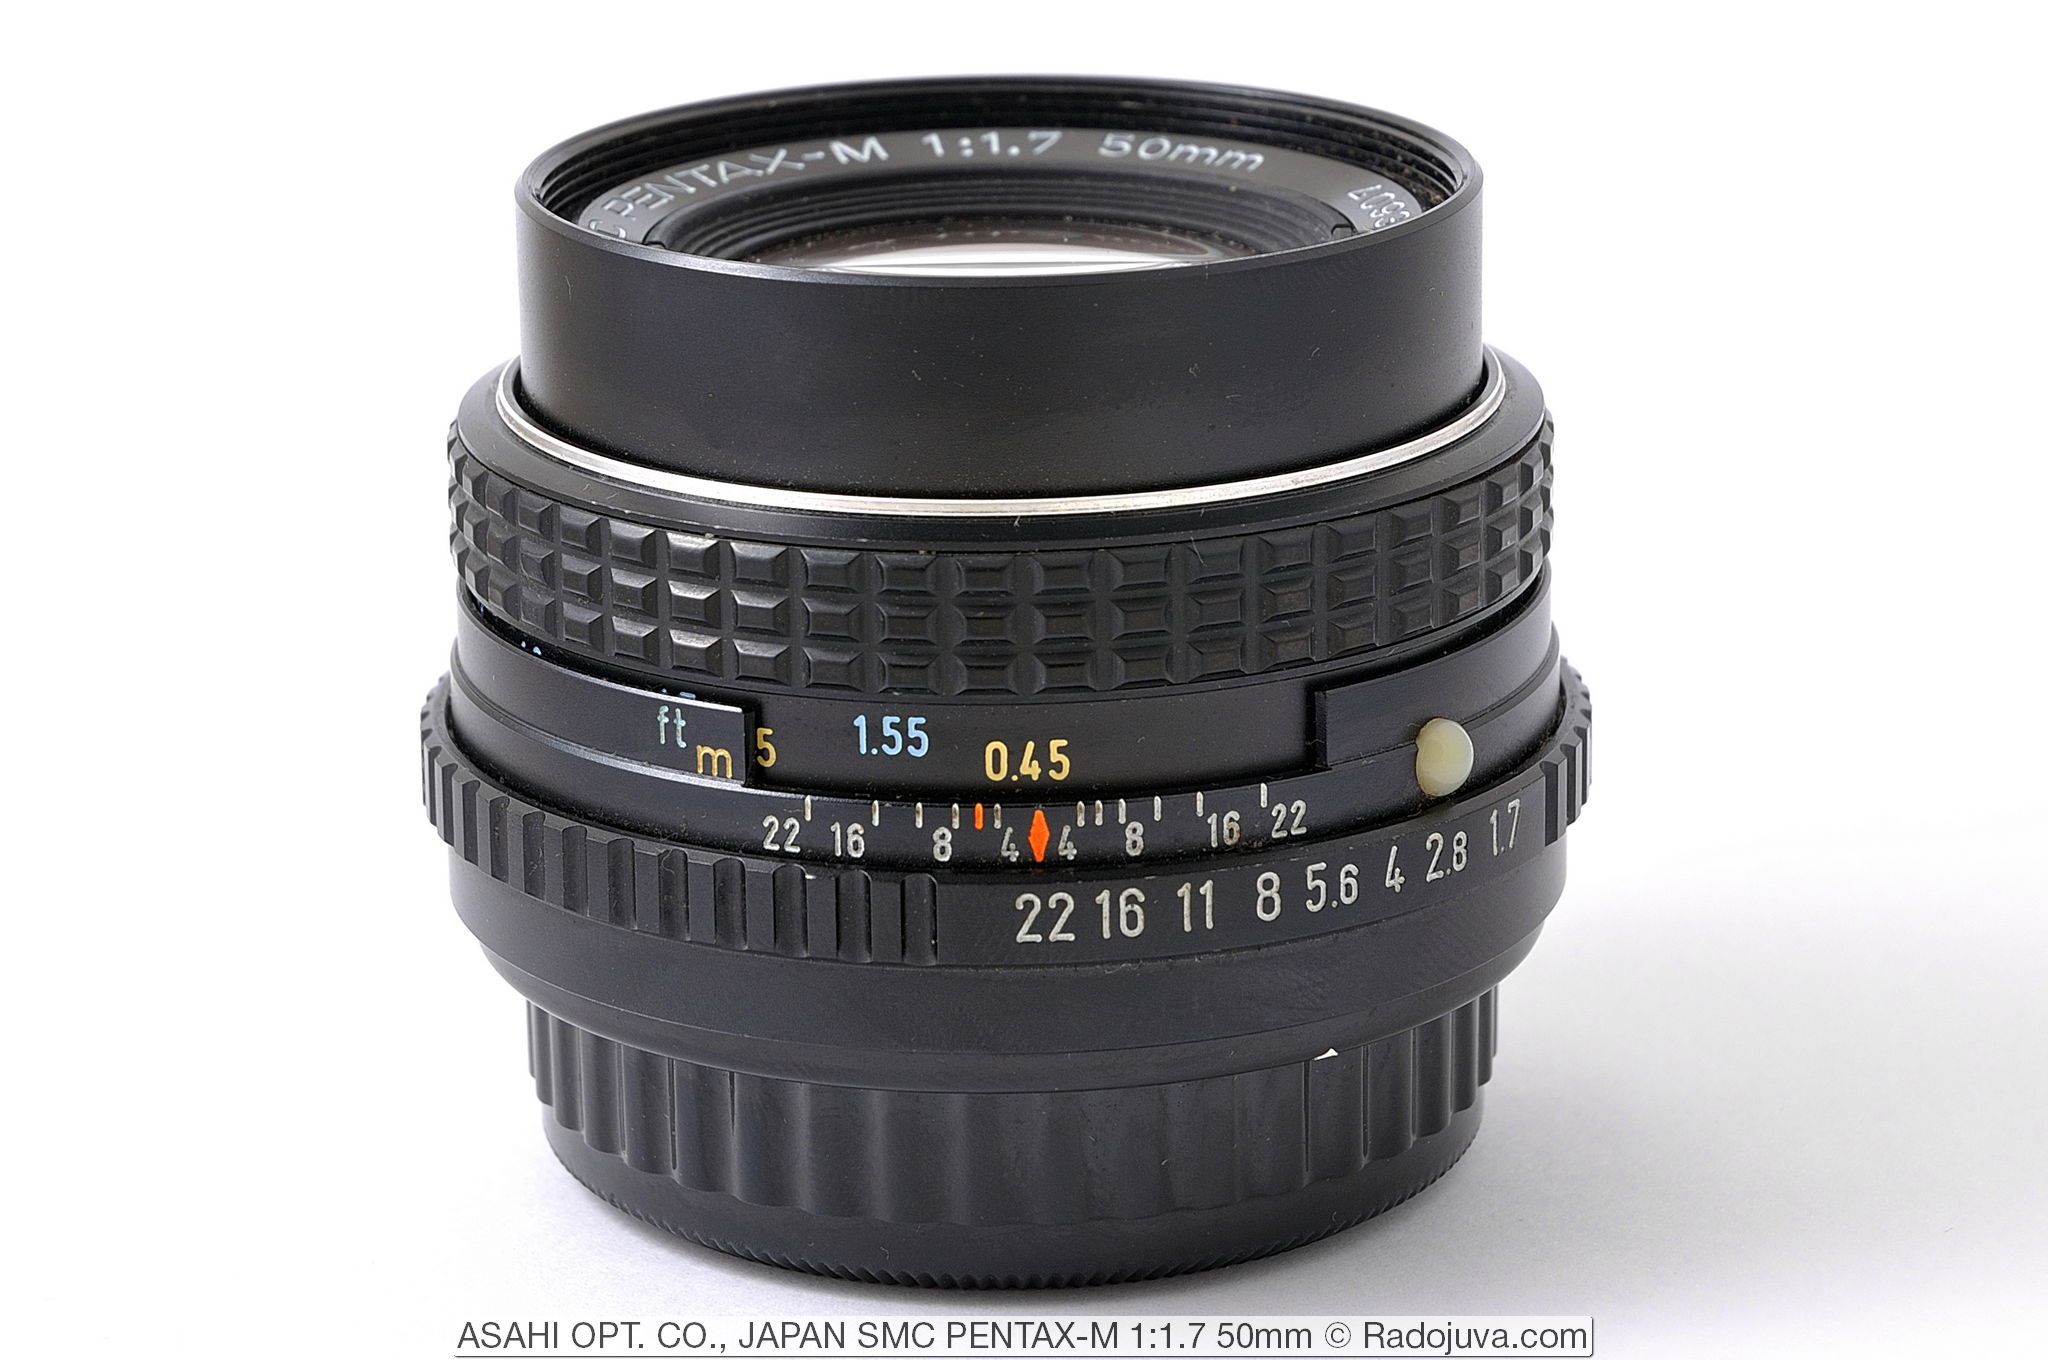 ASAHI OPT. CO., JAPAN SMC PENTAX-M 1: 1.7 50mm